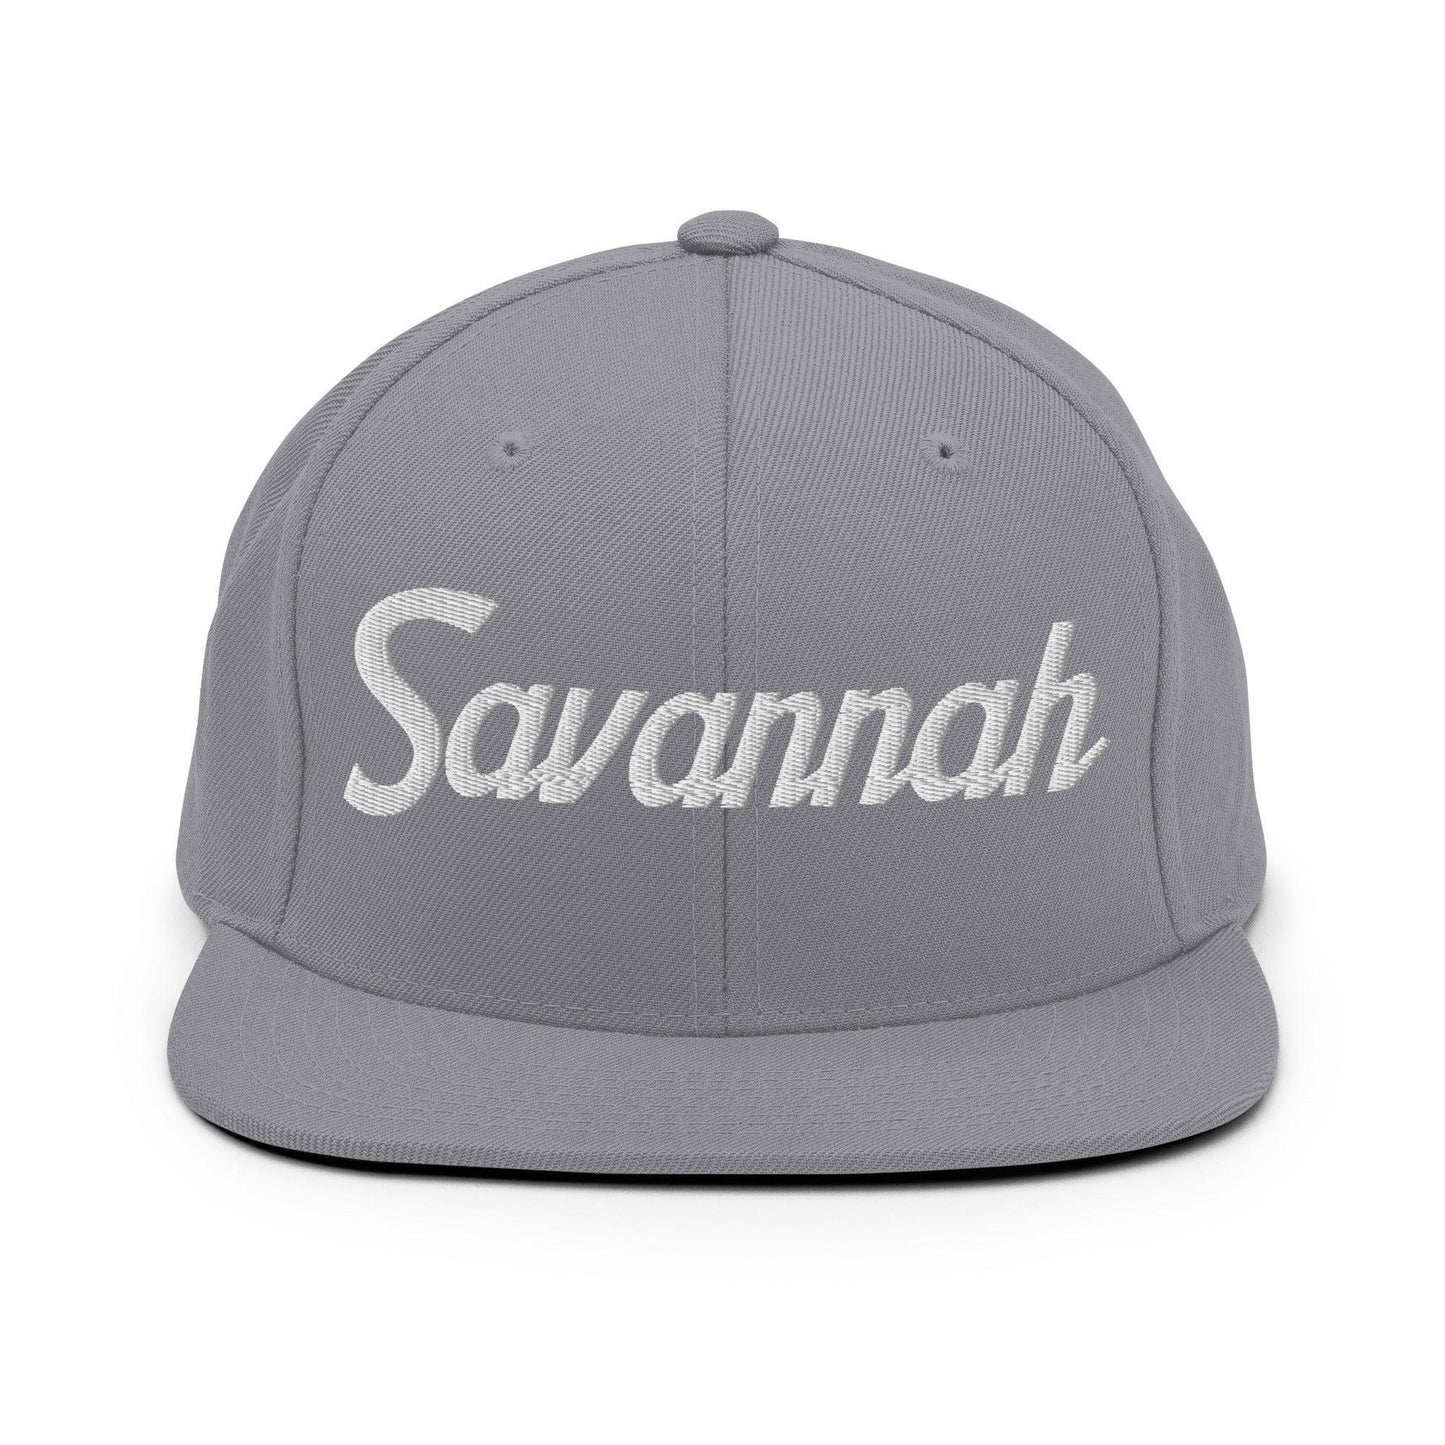 Savannah Script Snapback Hat Silver